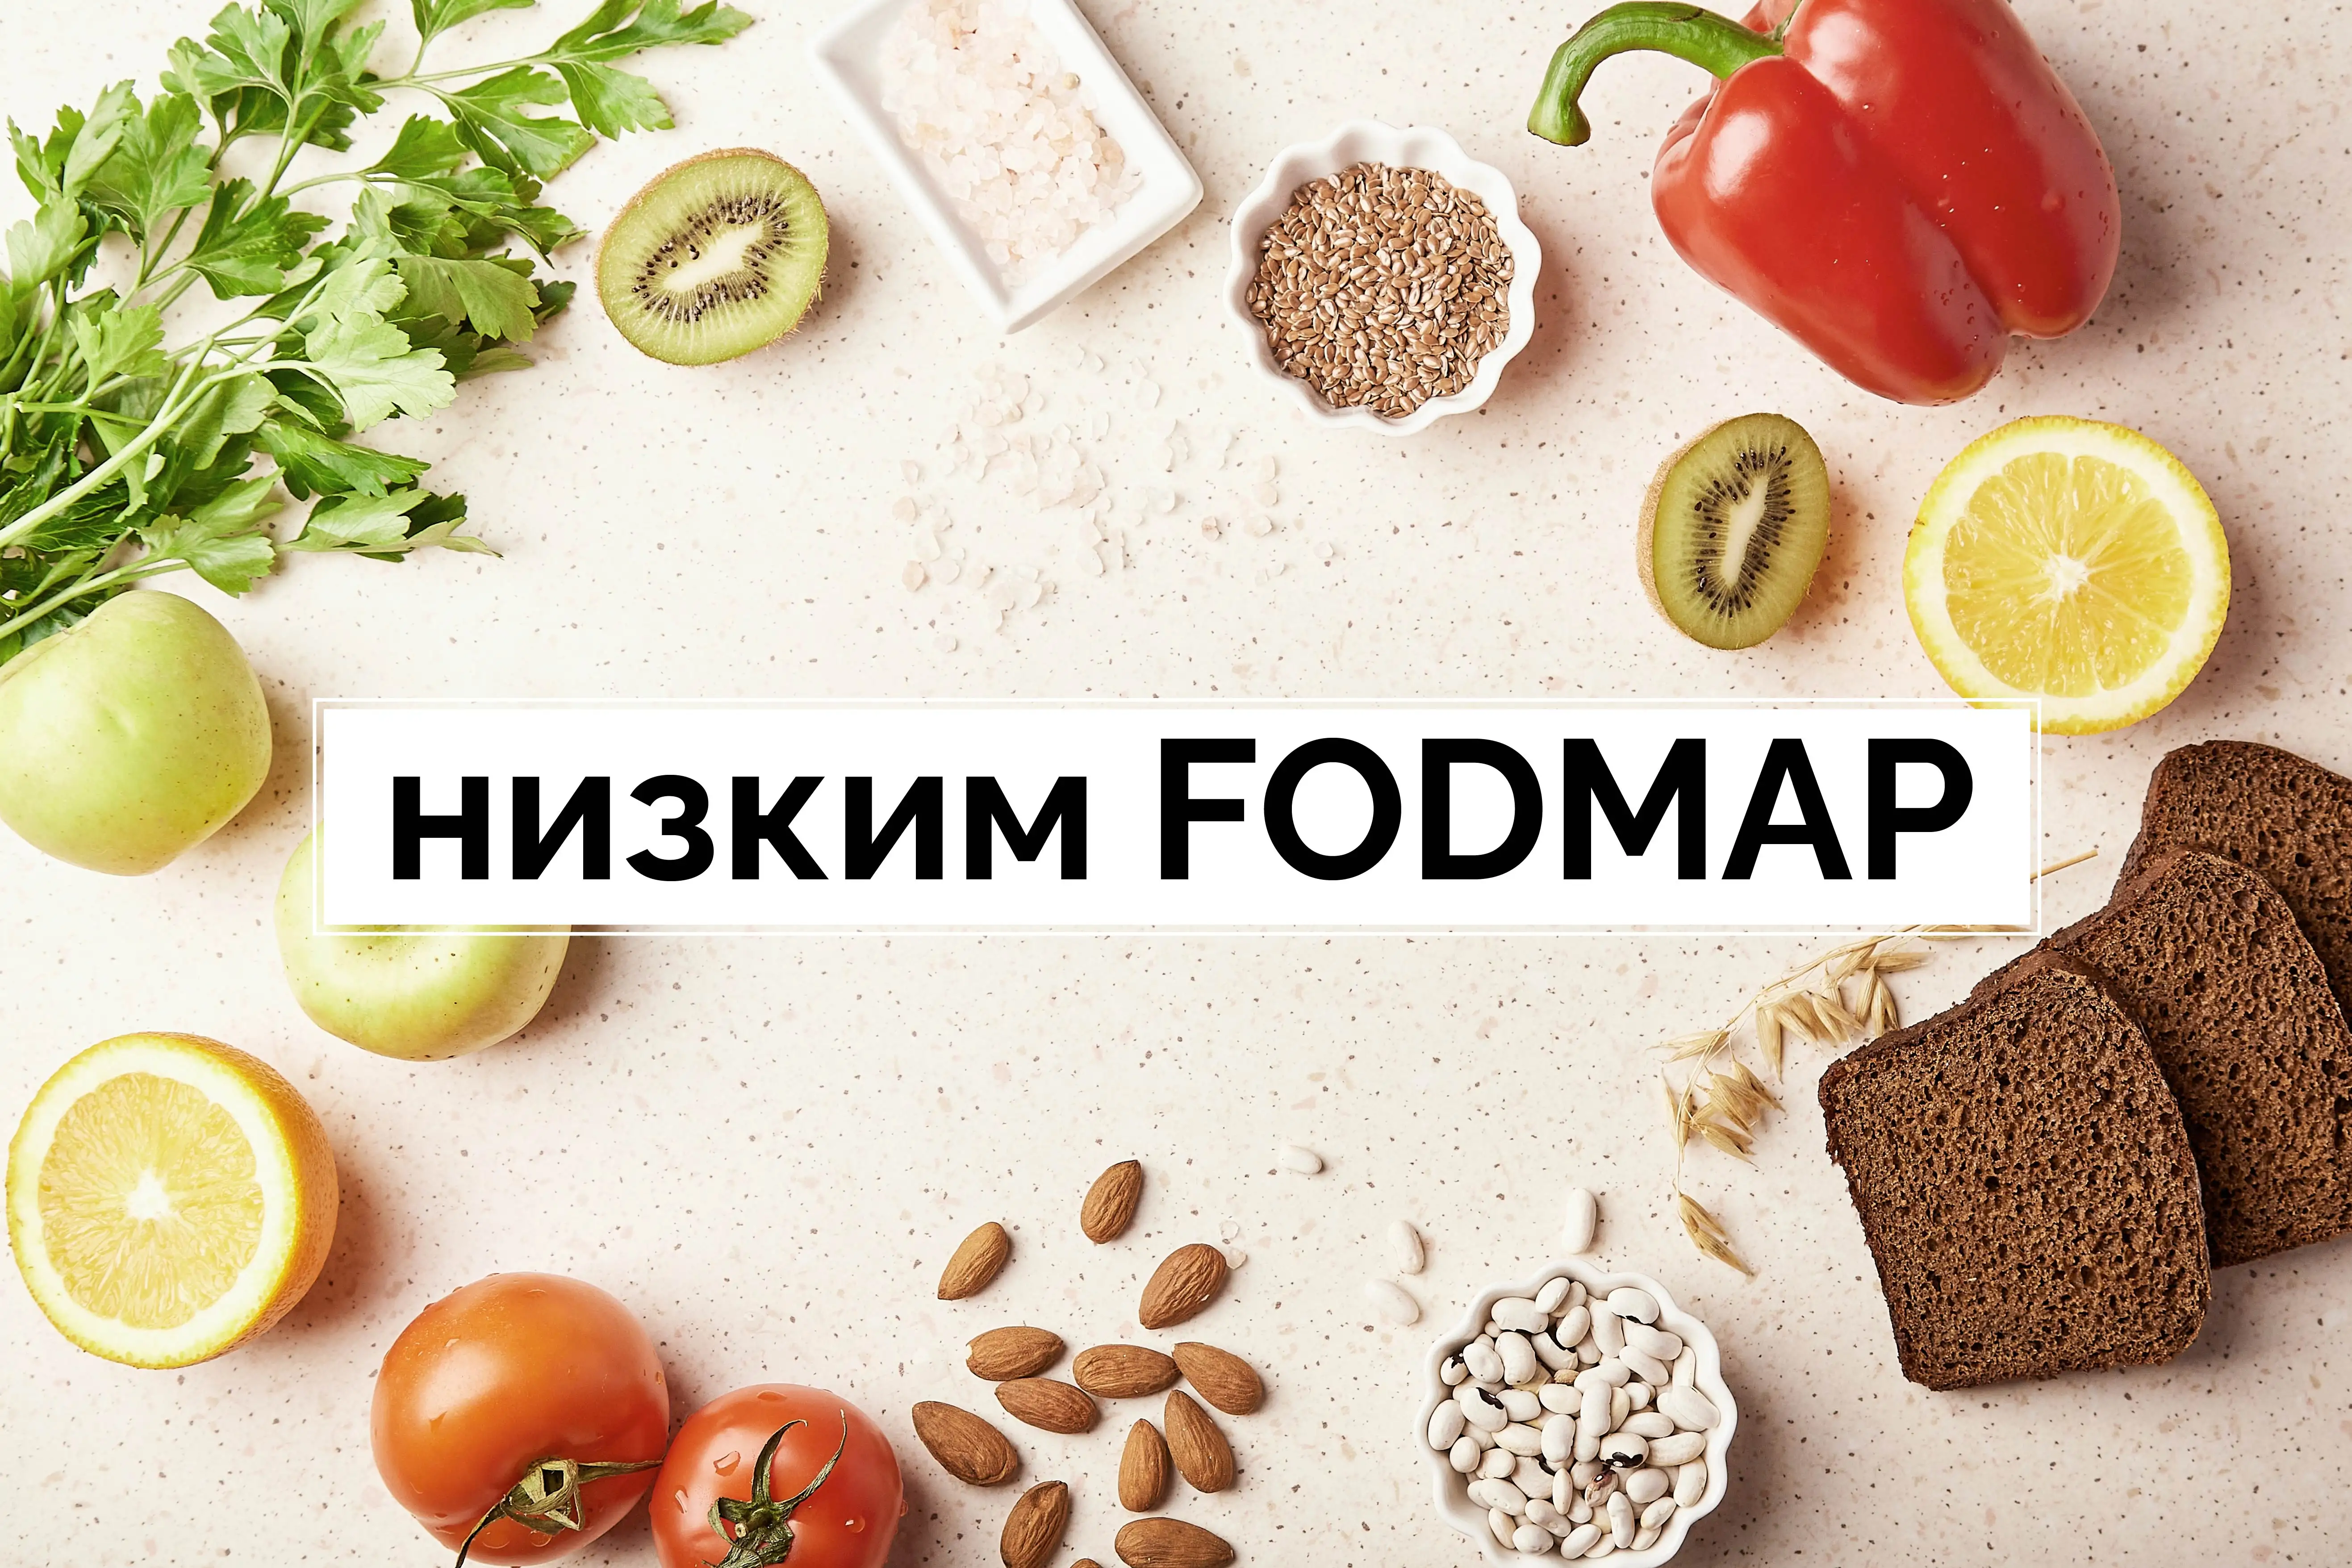 Low FODMAP diet